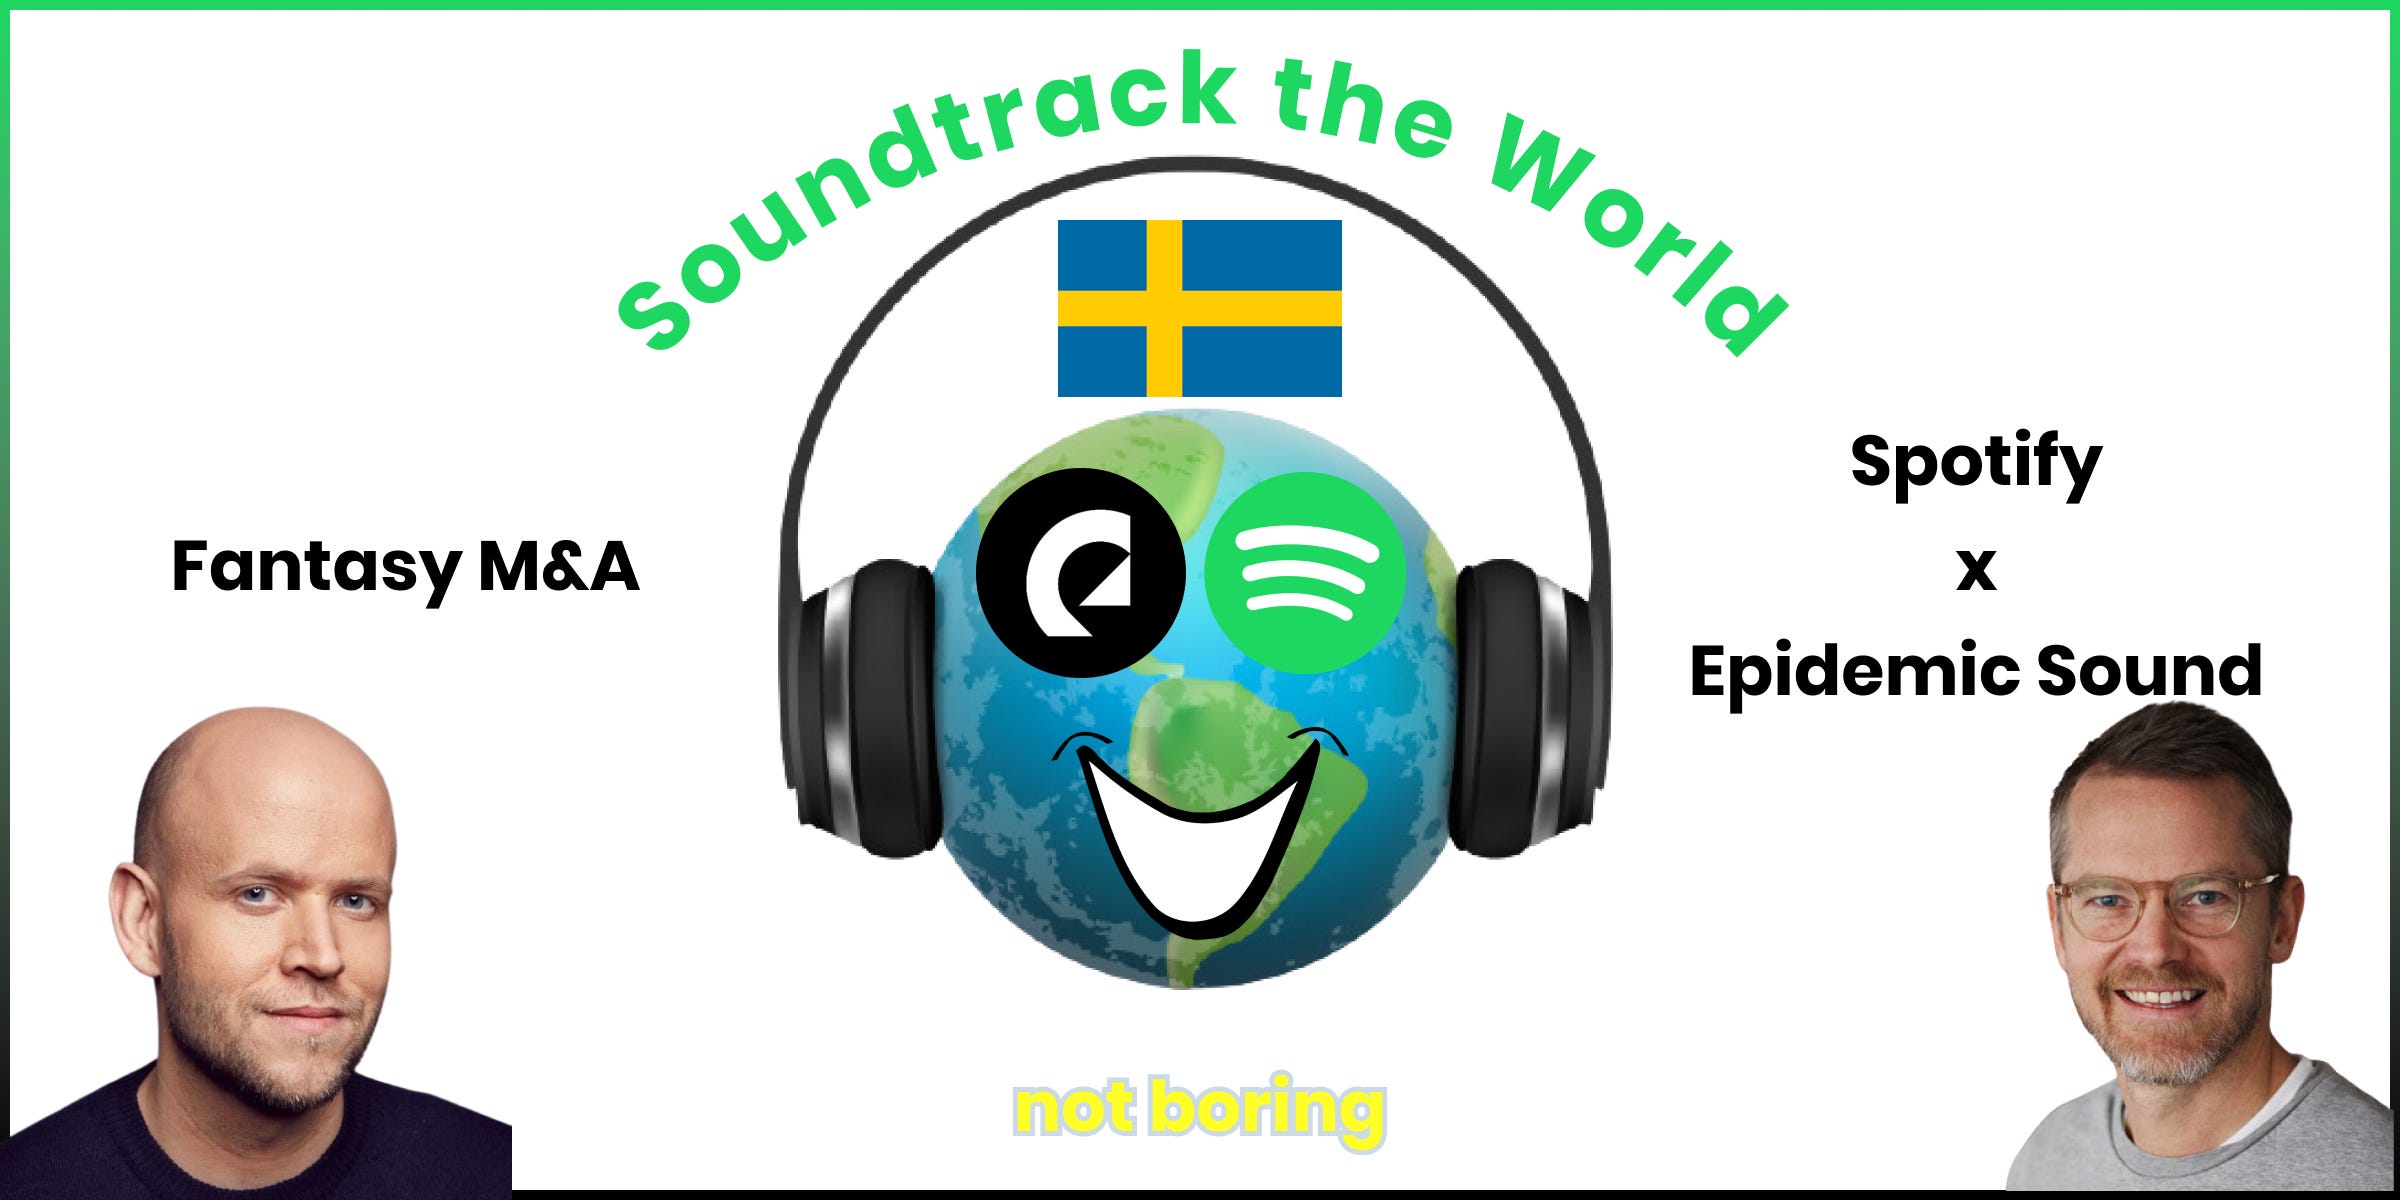 Soundtrack the World (Audio)